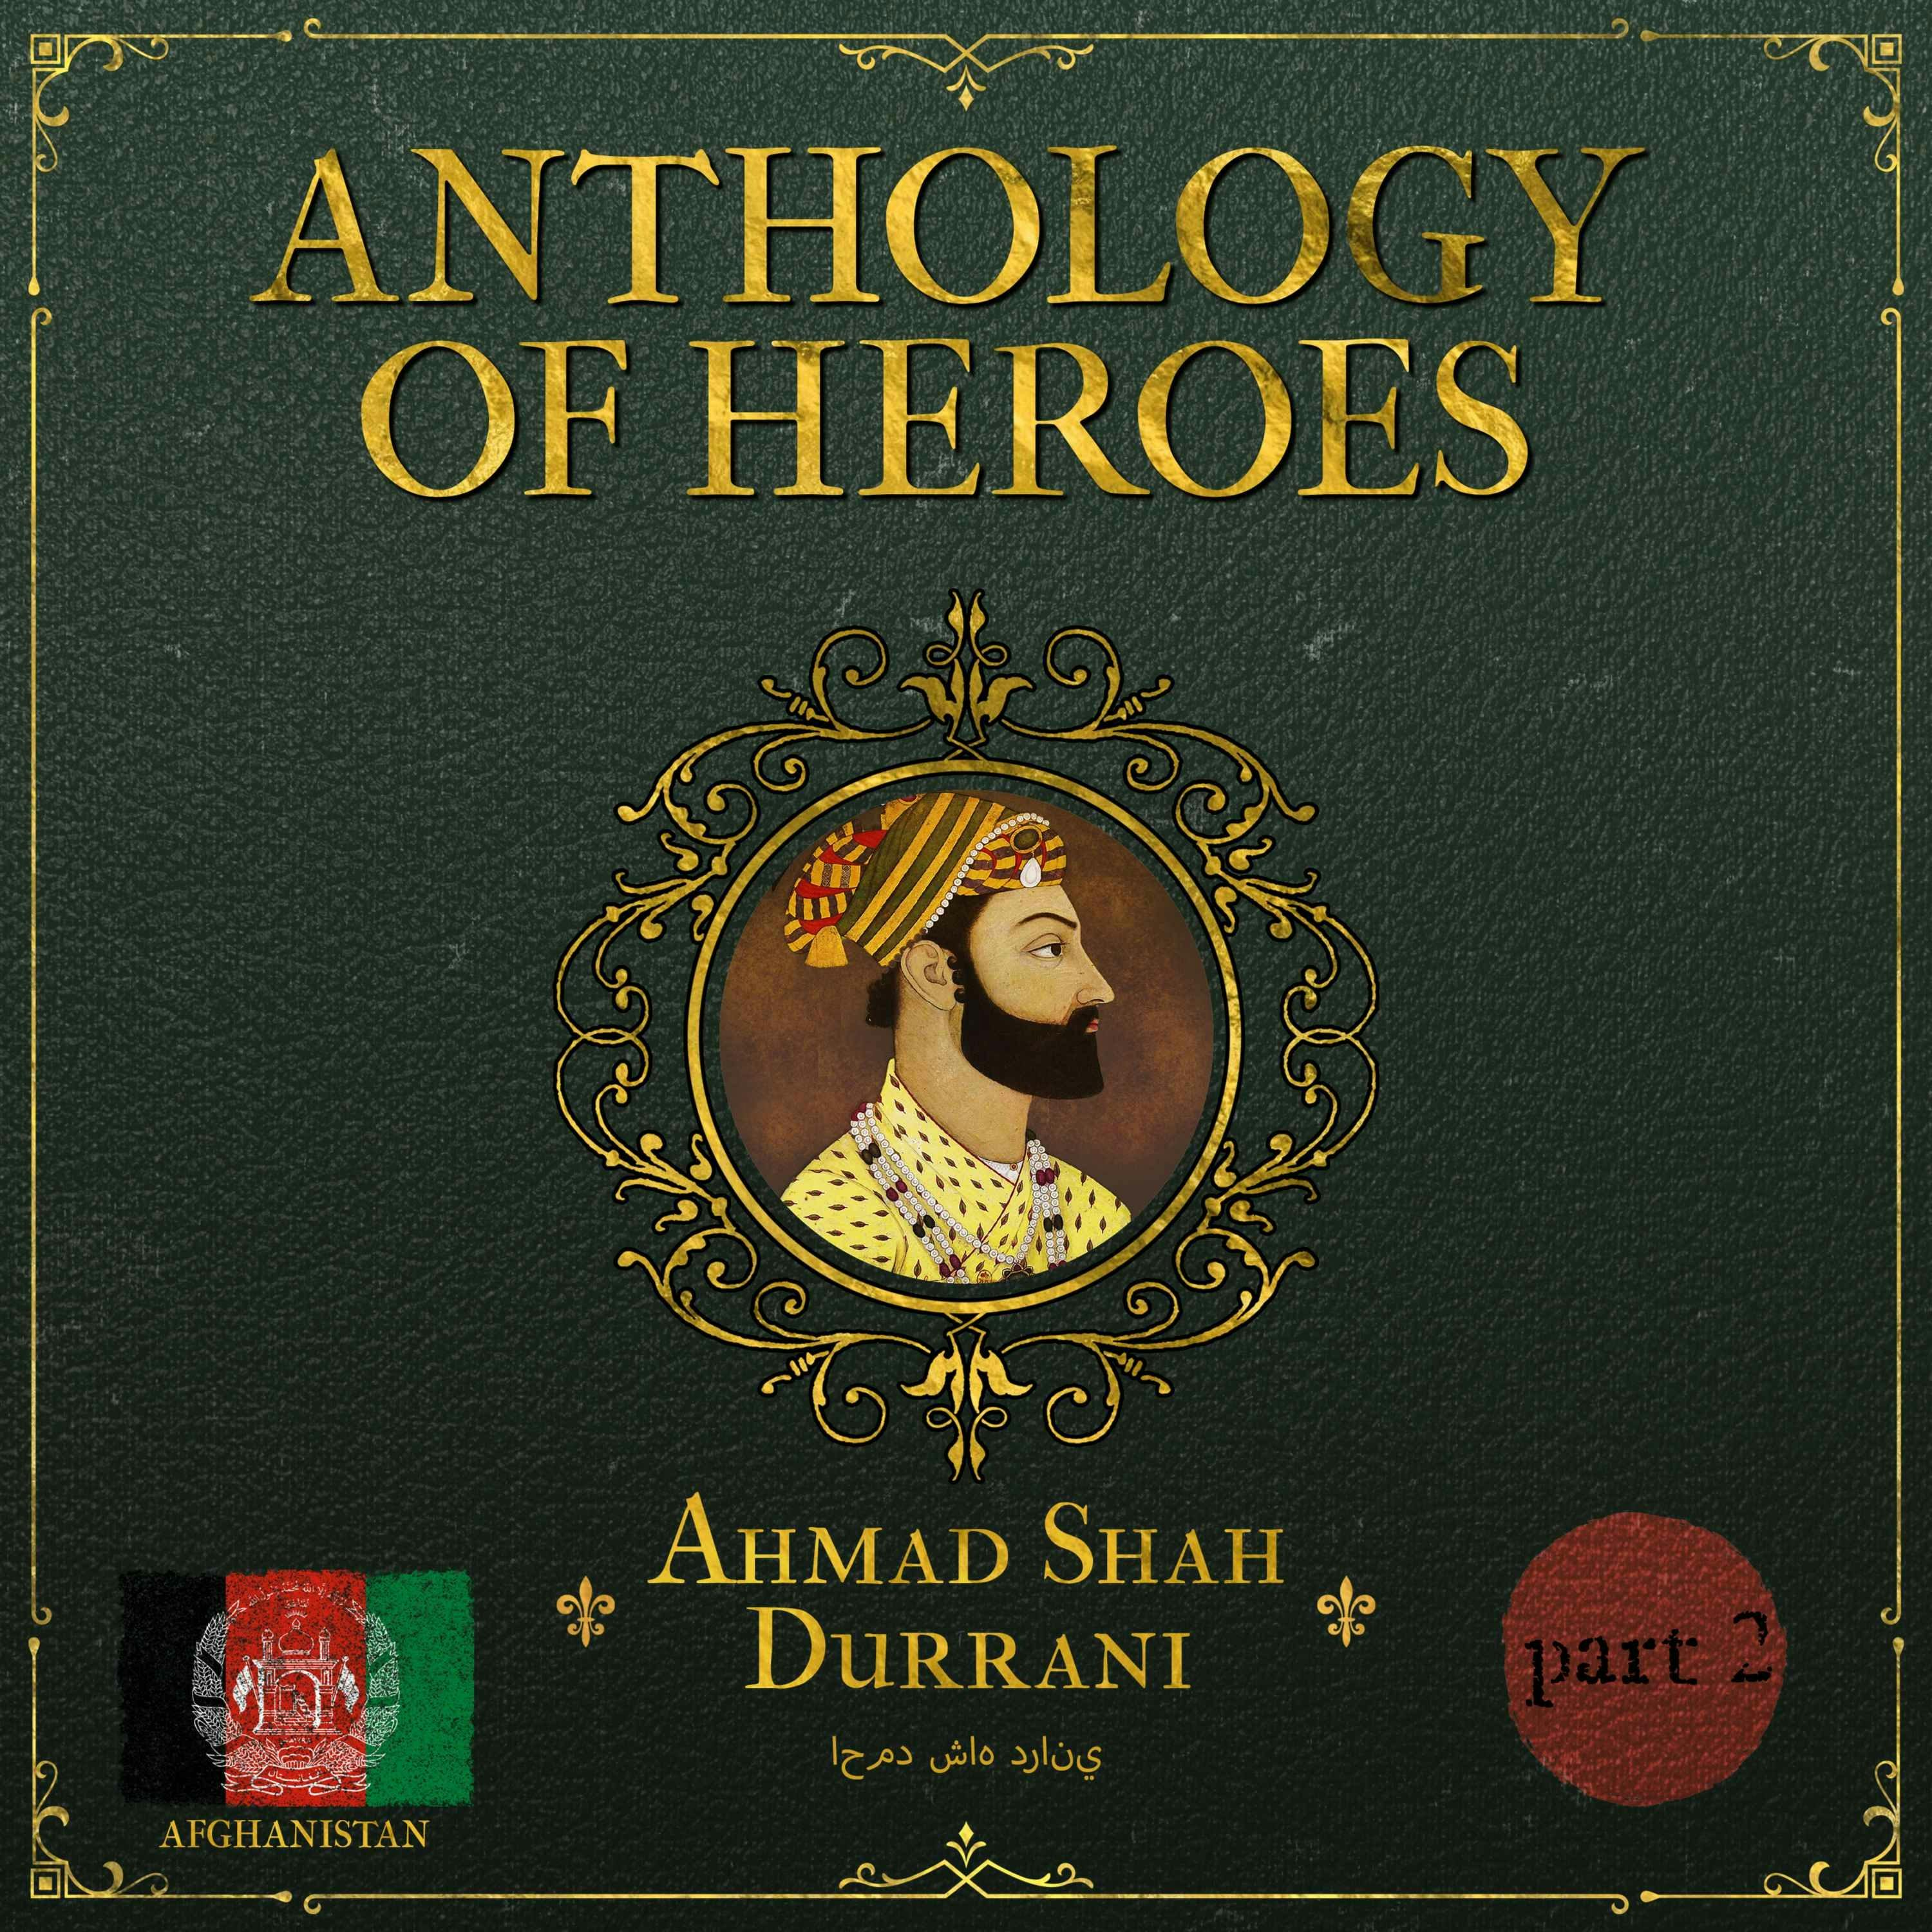 Ahmad Shah Durrani and The Last Afghan Empire | Part 2